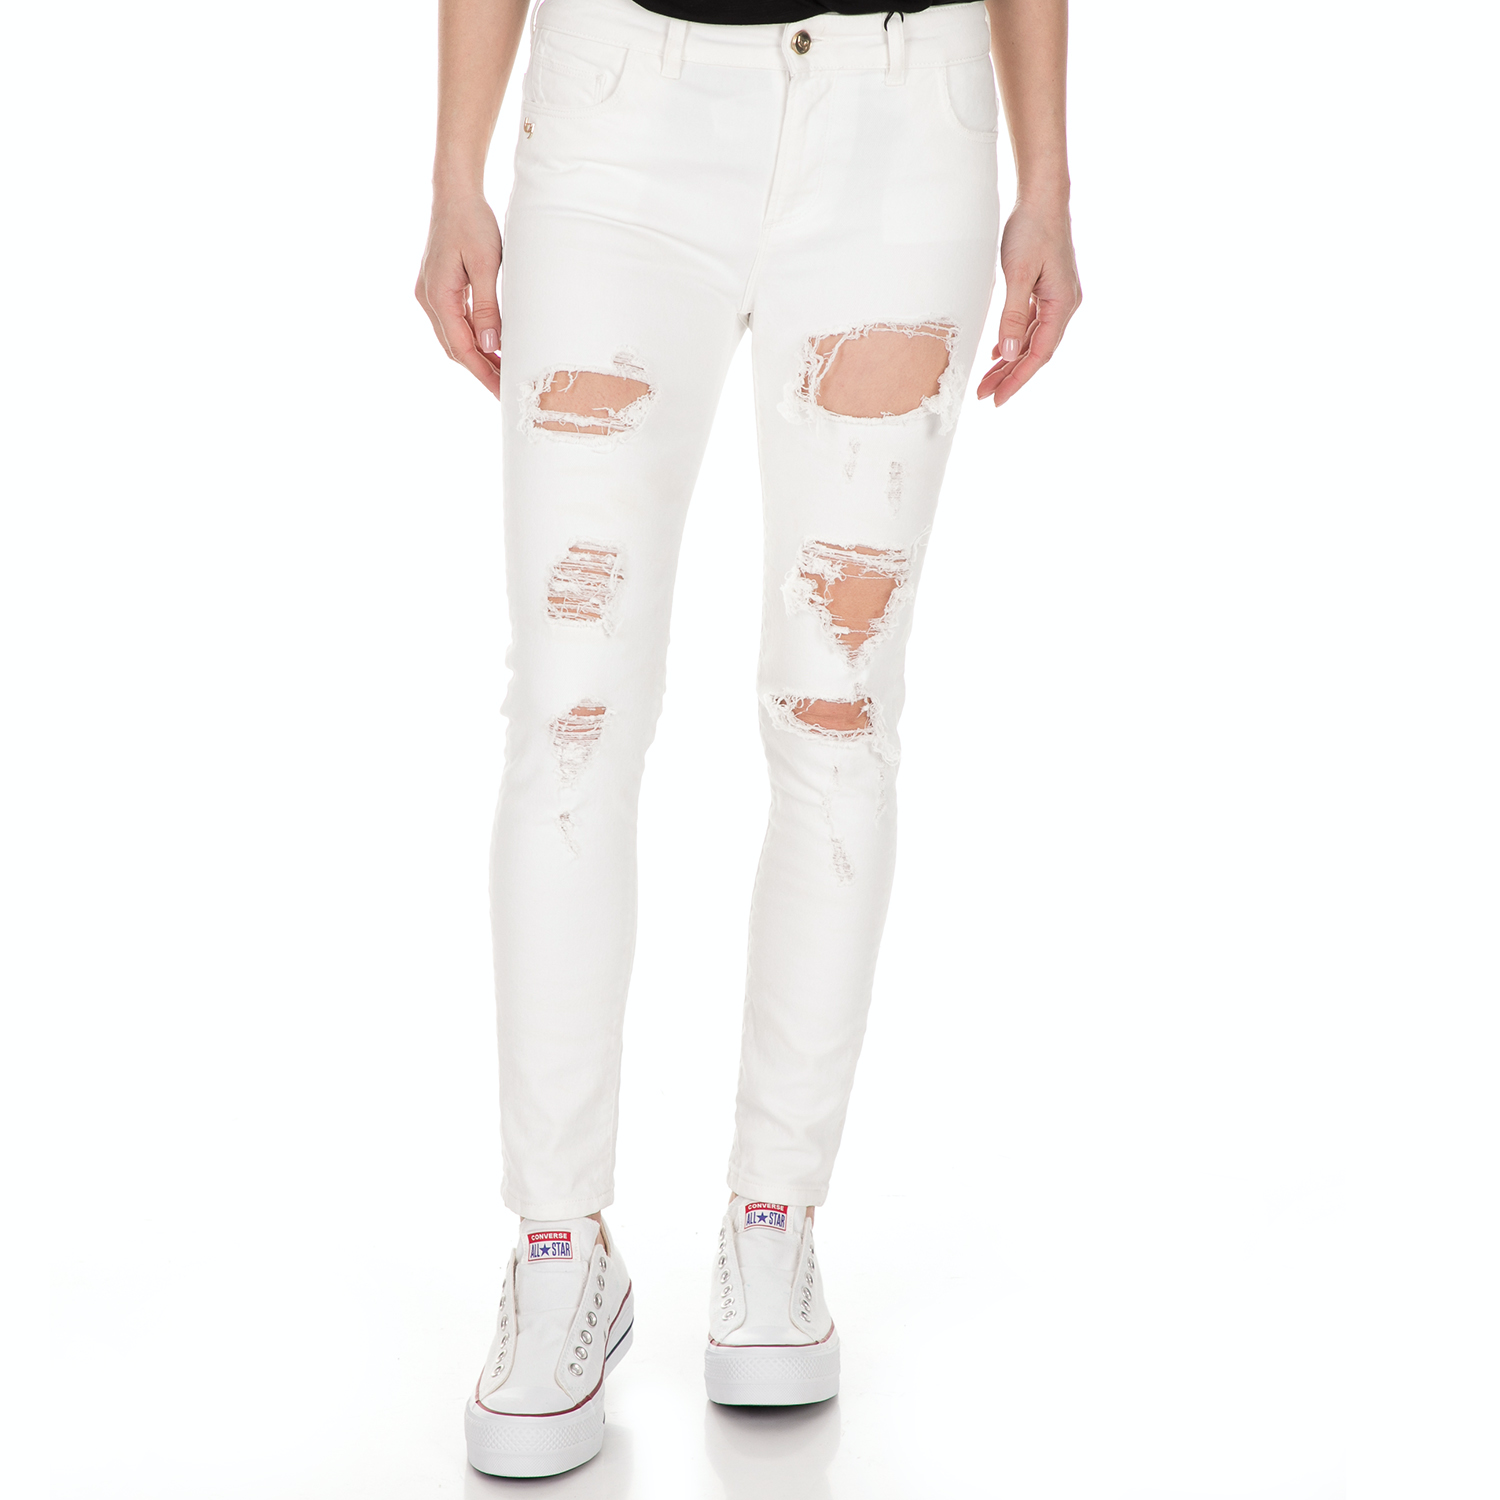 BYBLOS - Γυναικειο τζιν παντελόνι BYBLOS λευκό Γυναικεία/Ρούχα/Τζίν/Skinny